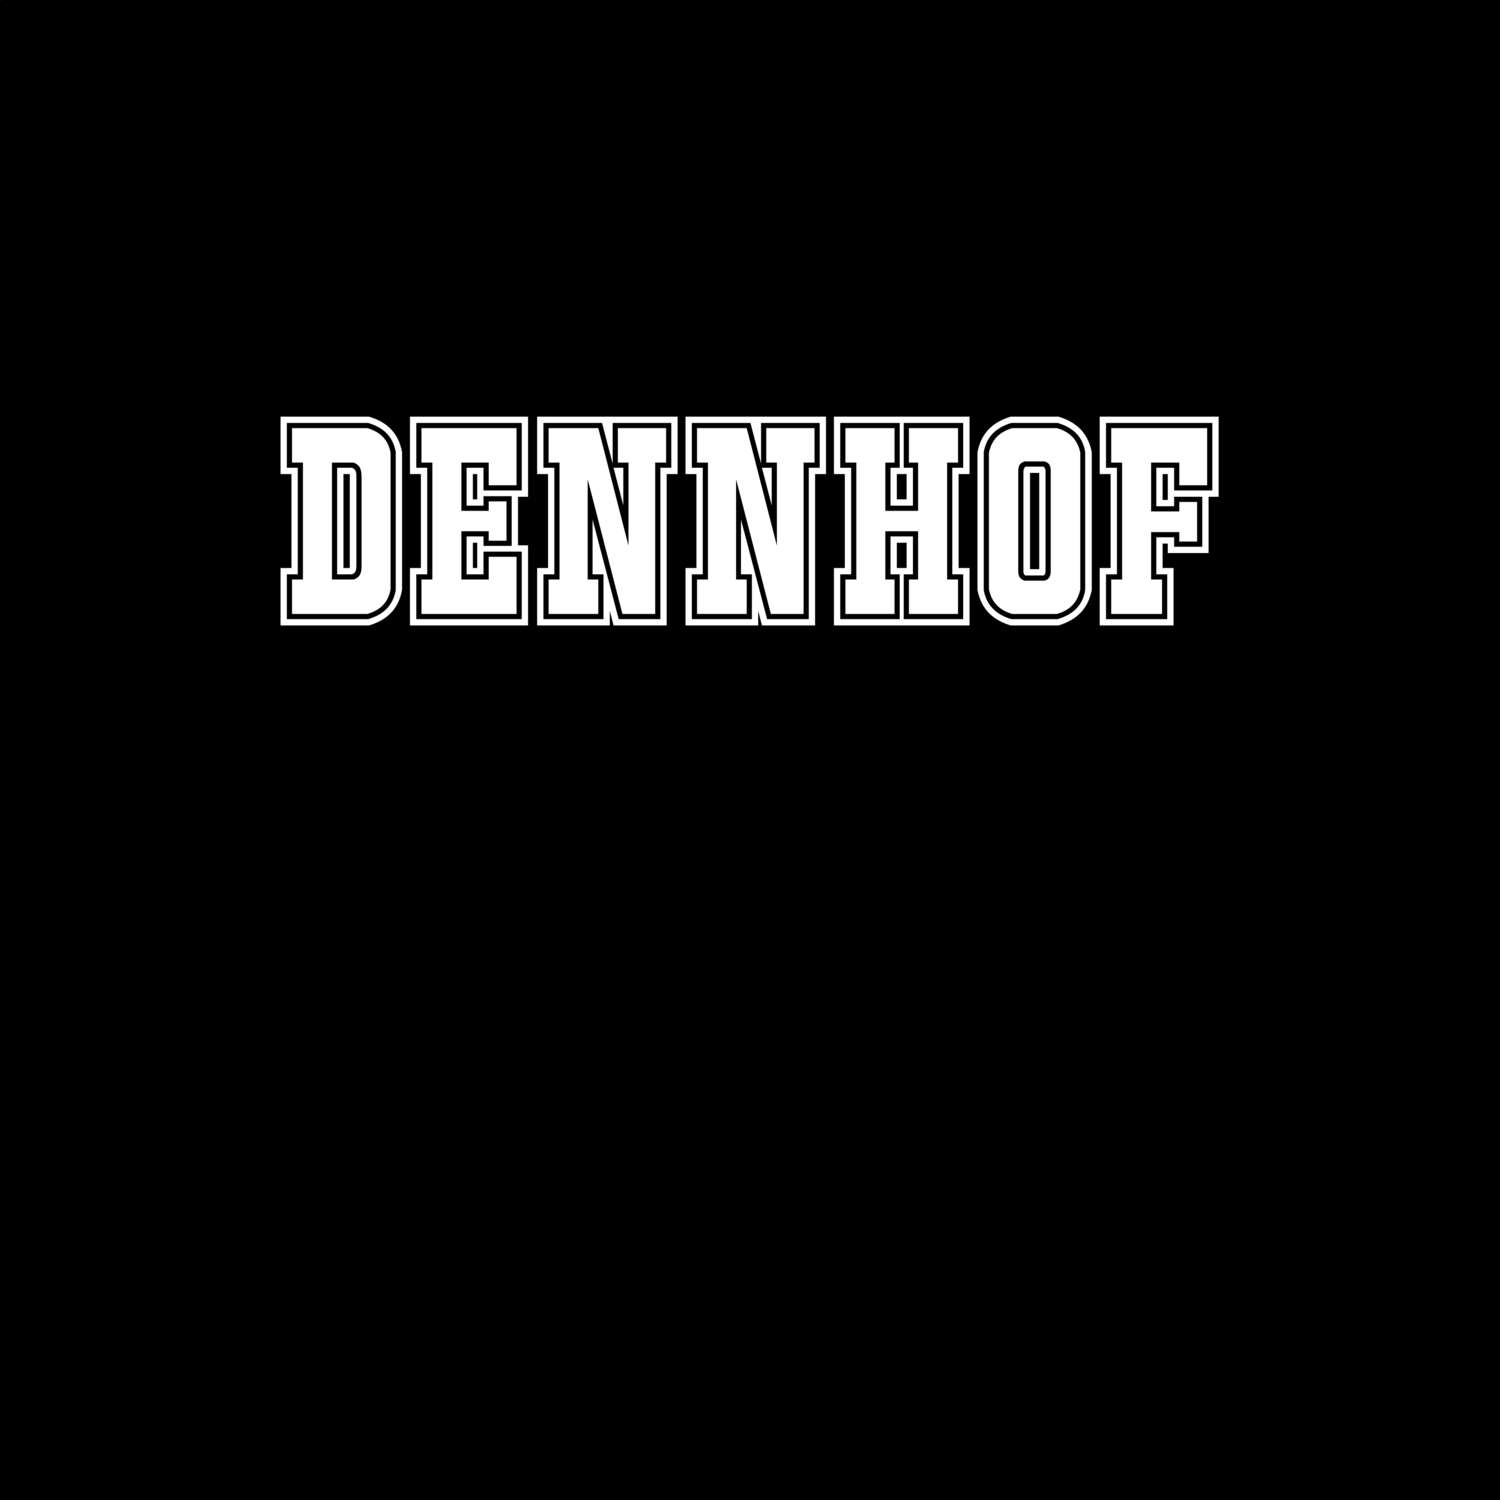 Dennhof T-Shirt »Classic«